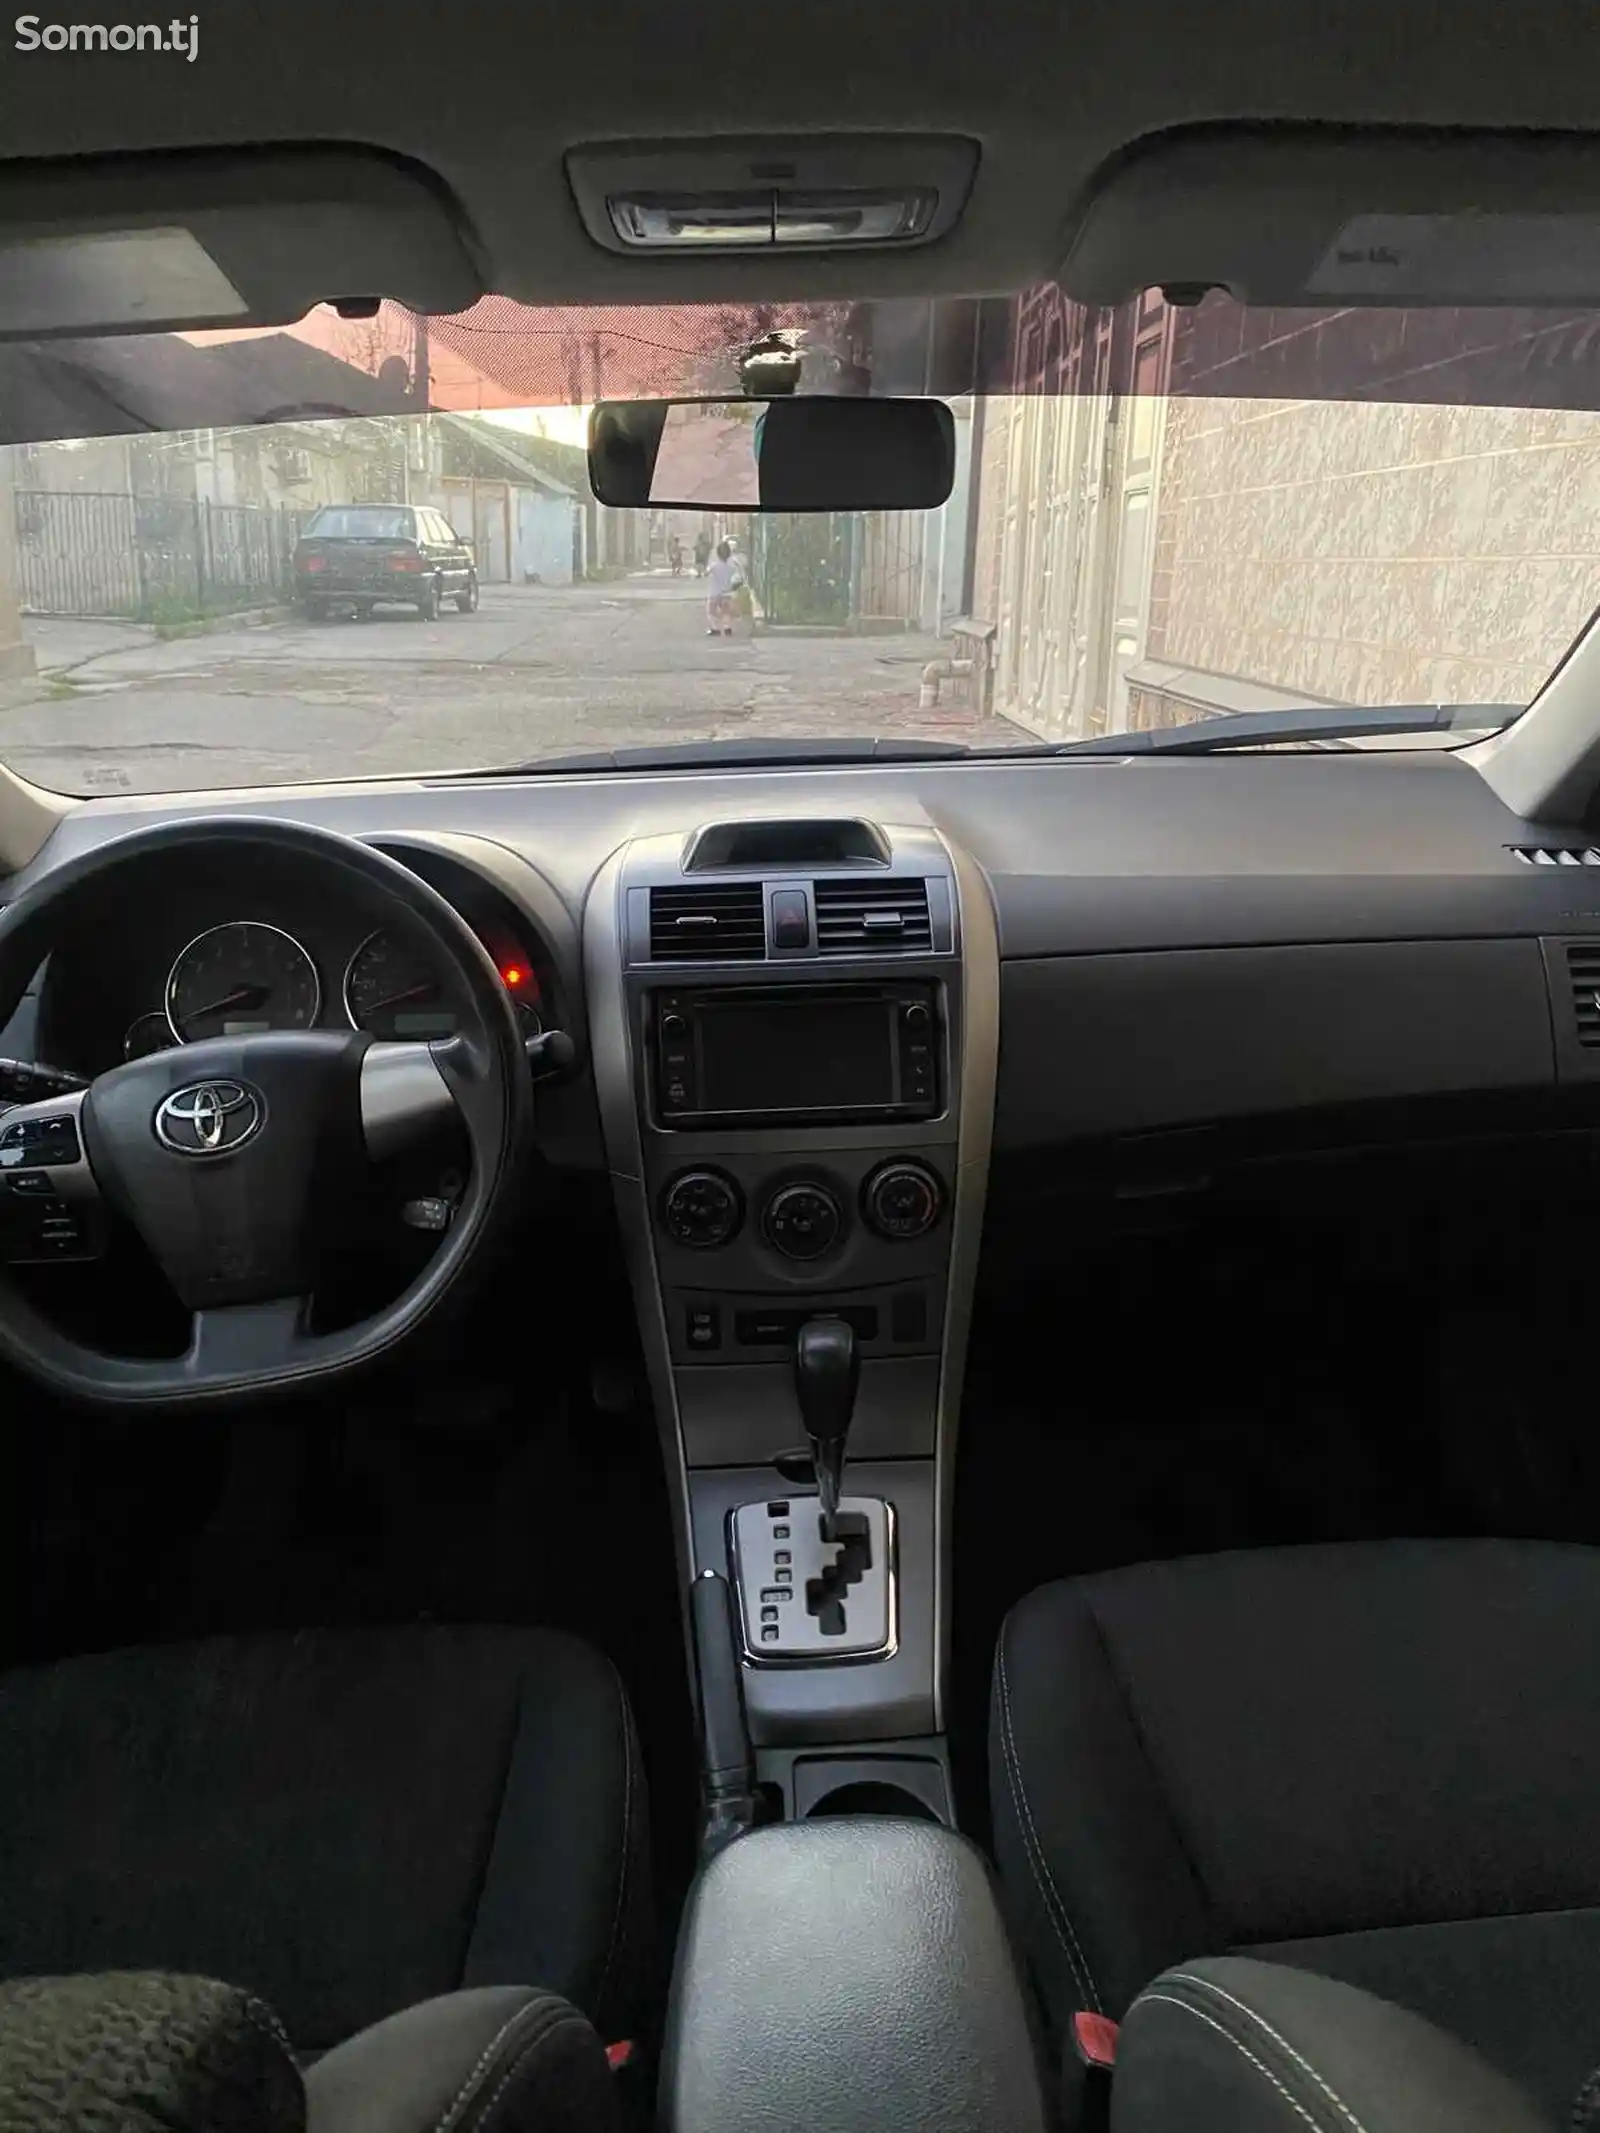 Toyota Corolla, 2013-5